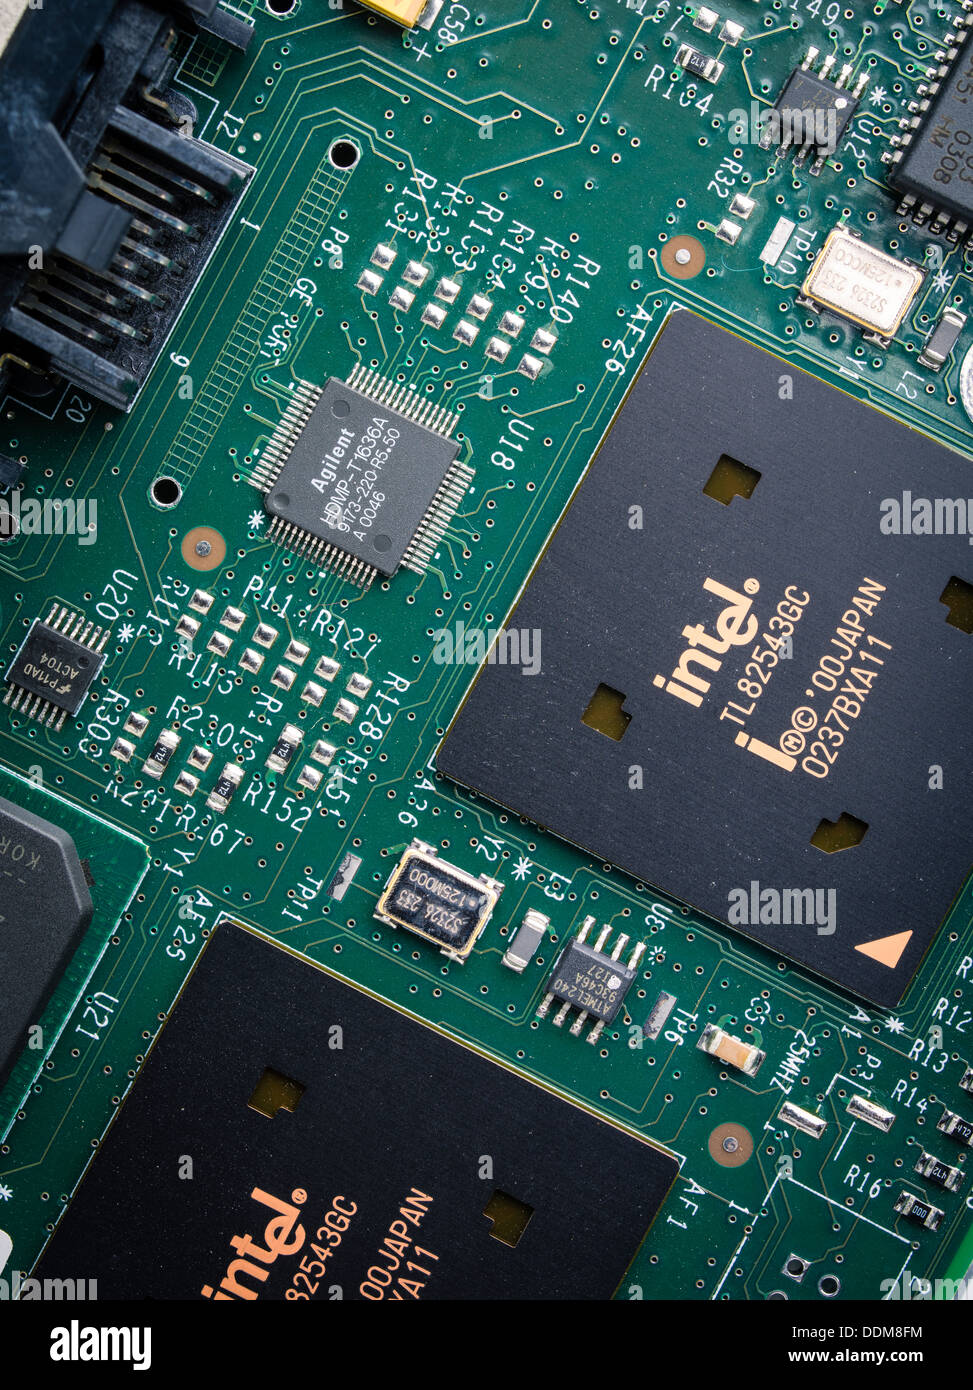 Made in Japan, Intel Microchip Flash Memory Circuit Board Stock Photo